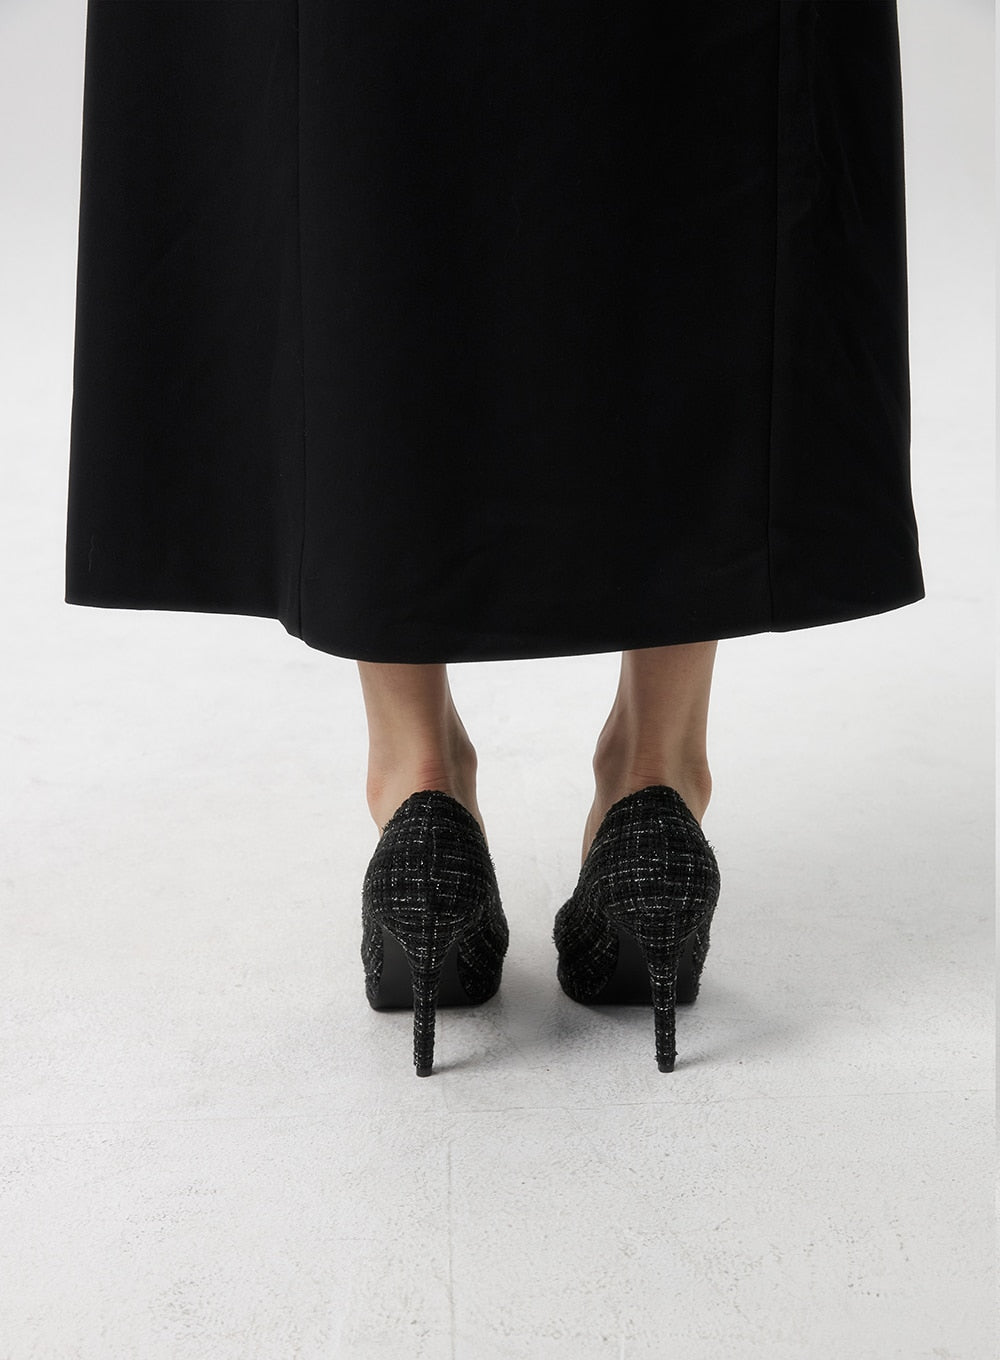 tweed-stiletto-pump-heels-is315